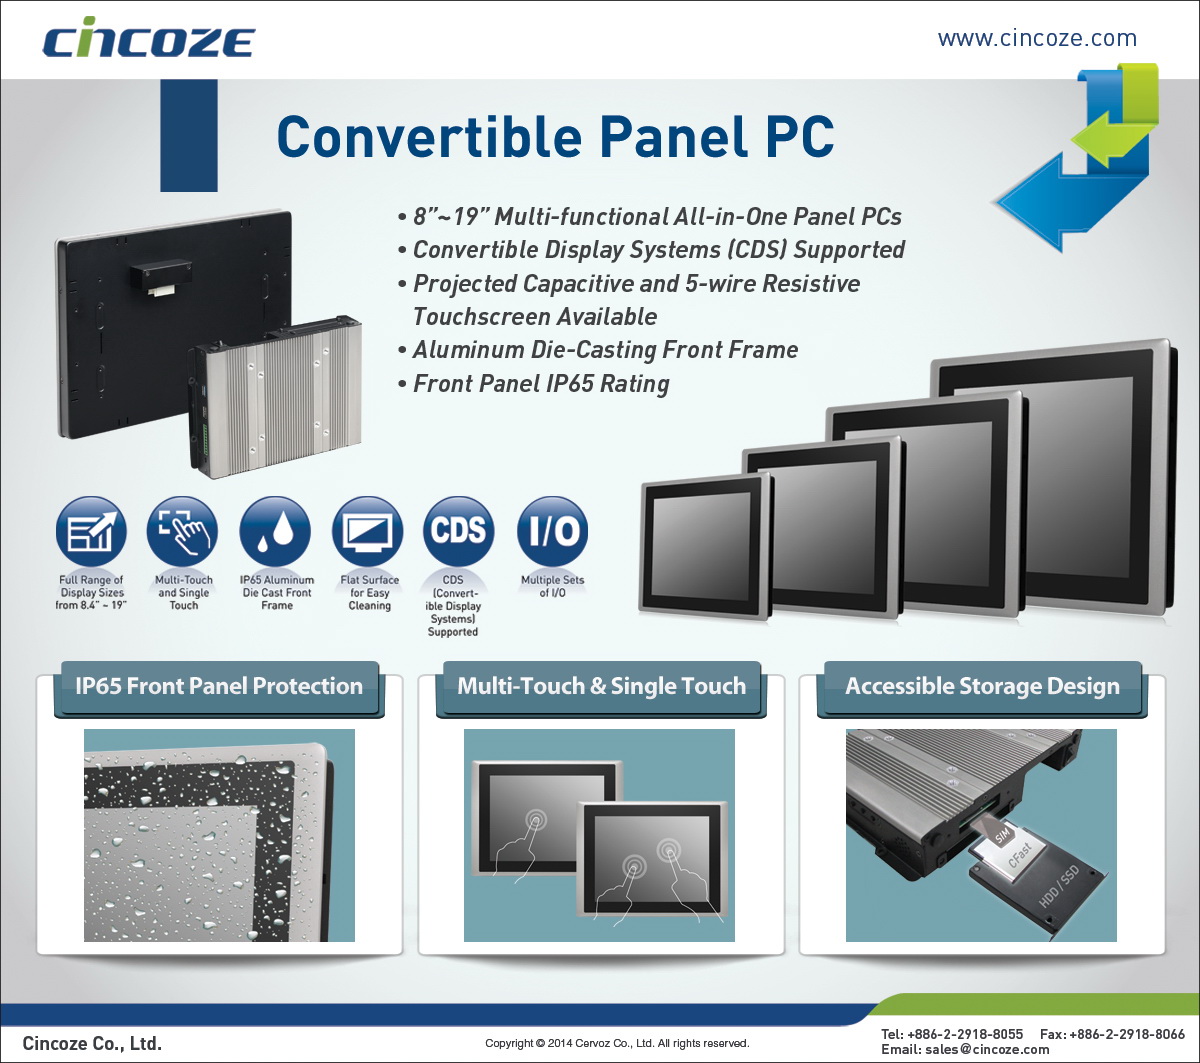 Convertible Panel PC